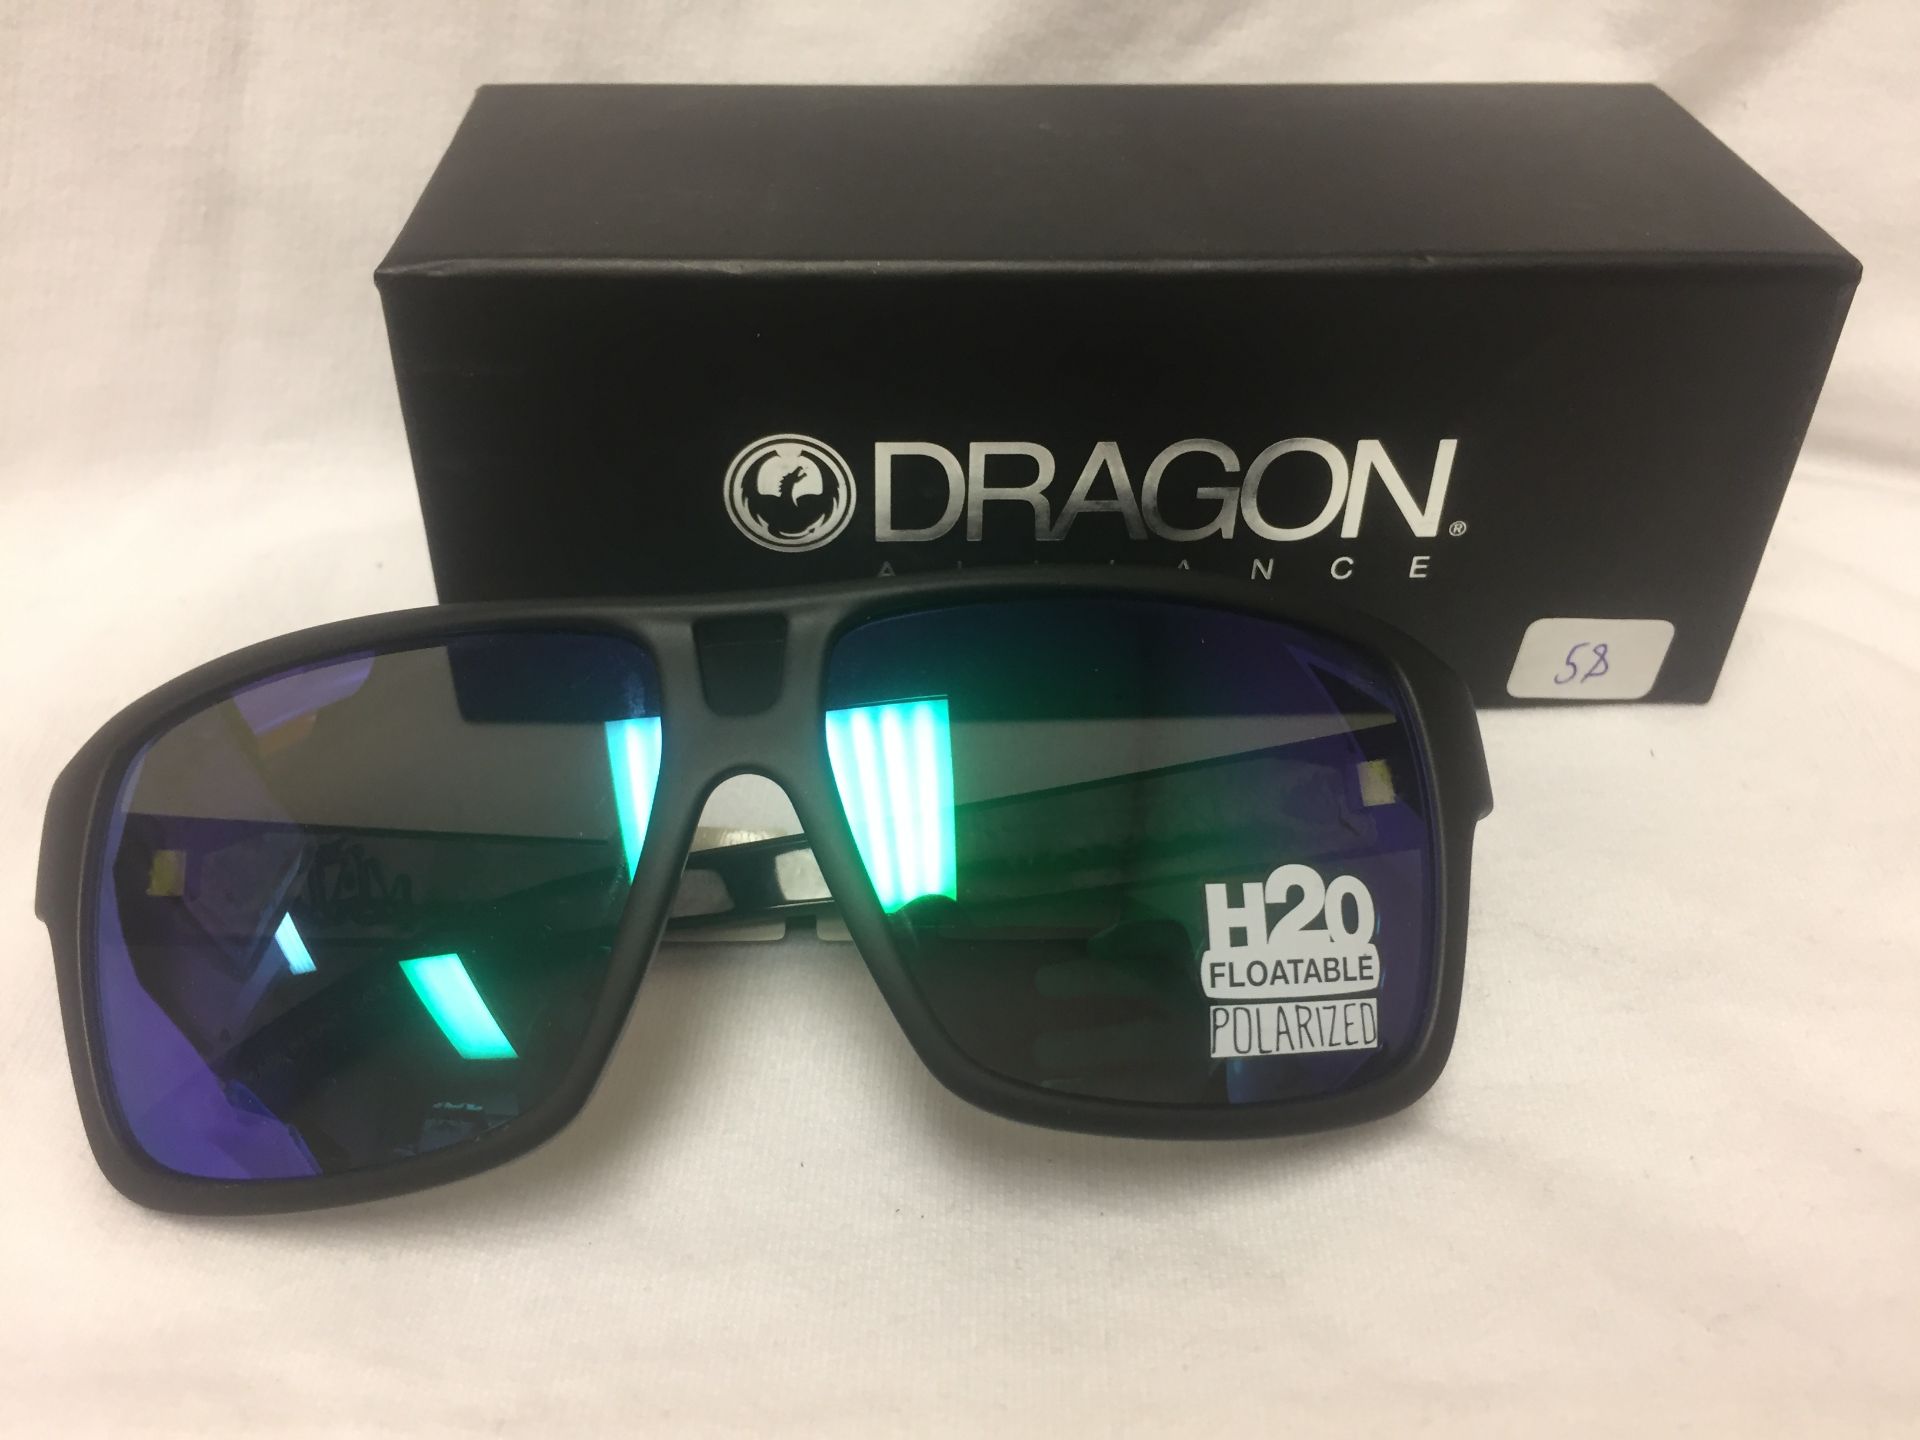 Dragon Alliance Sunglasses - Retail $195.00